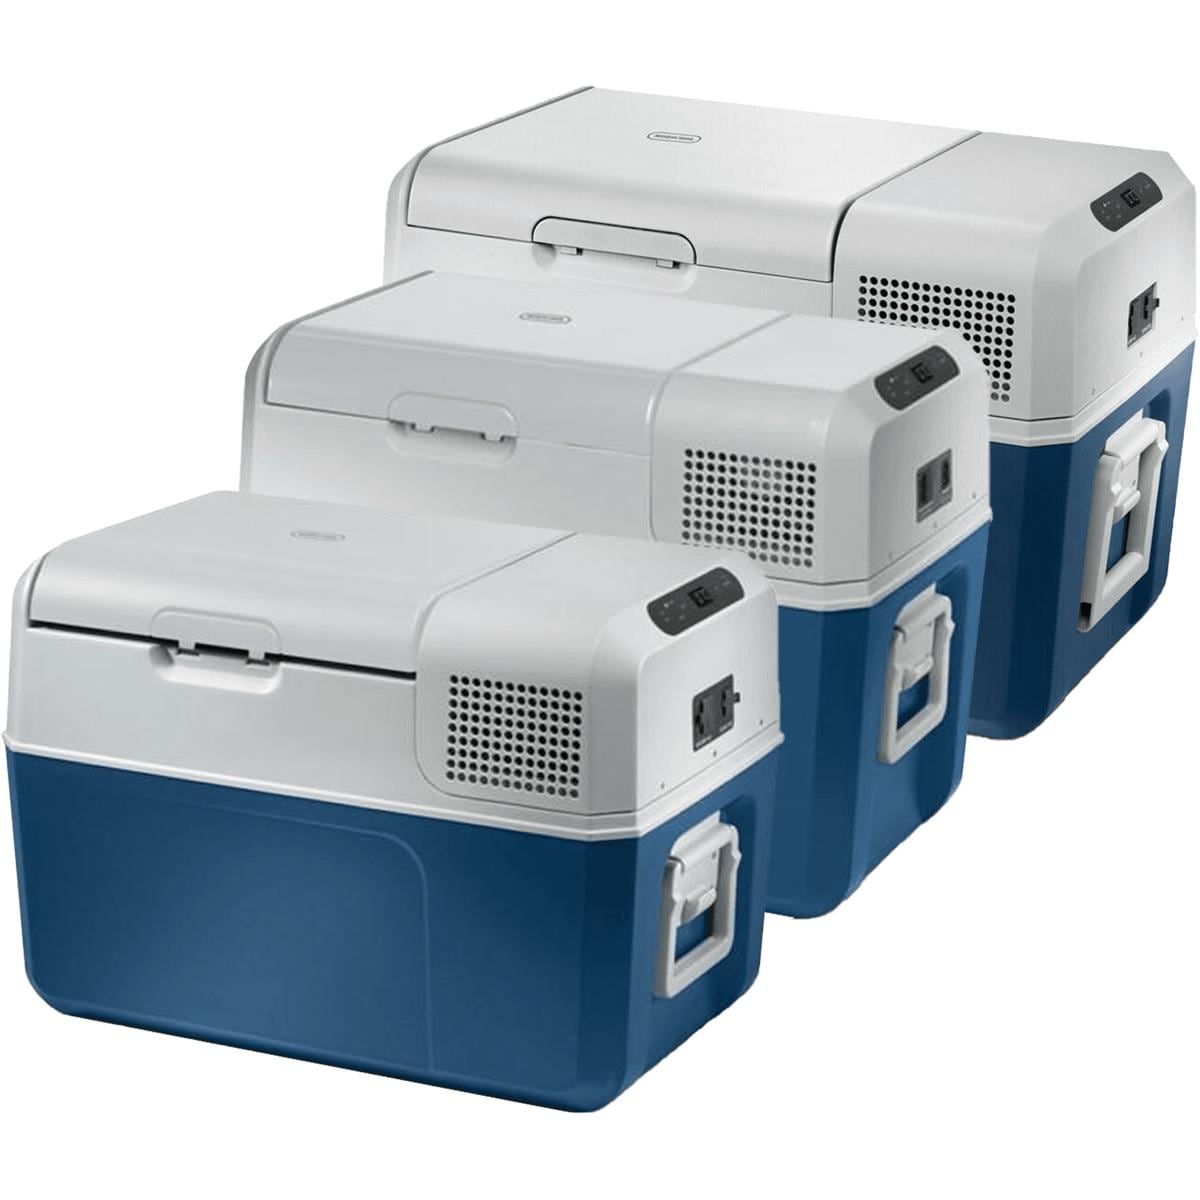 Kompressor-Kühlbox Mobicool FR34 für 199 EUR inkl. Versand